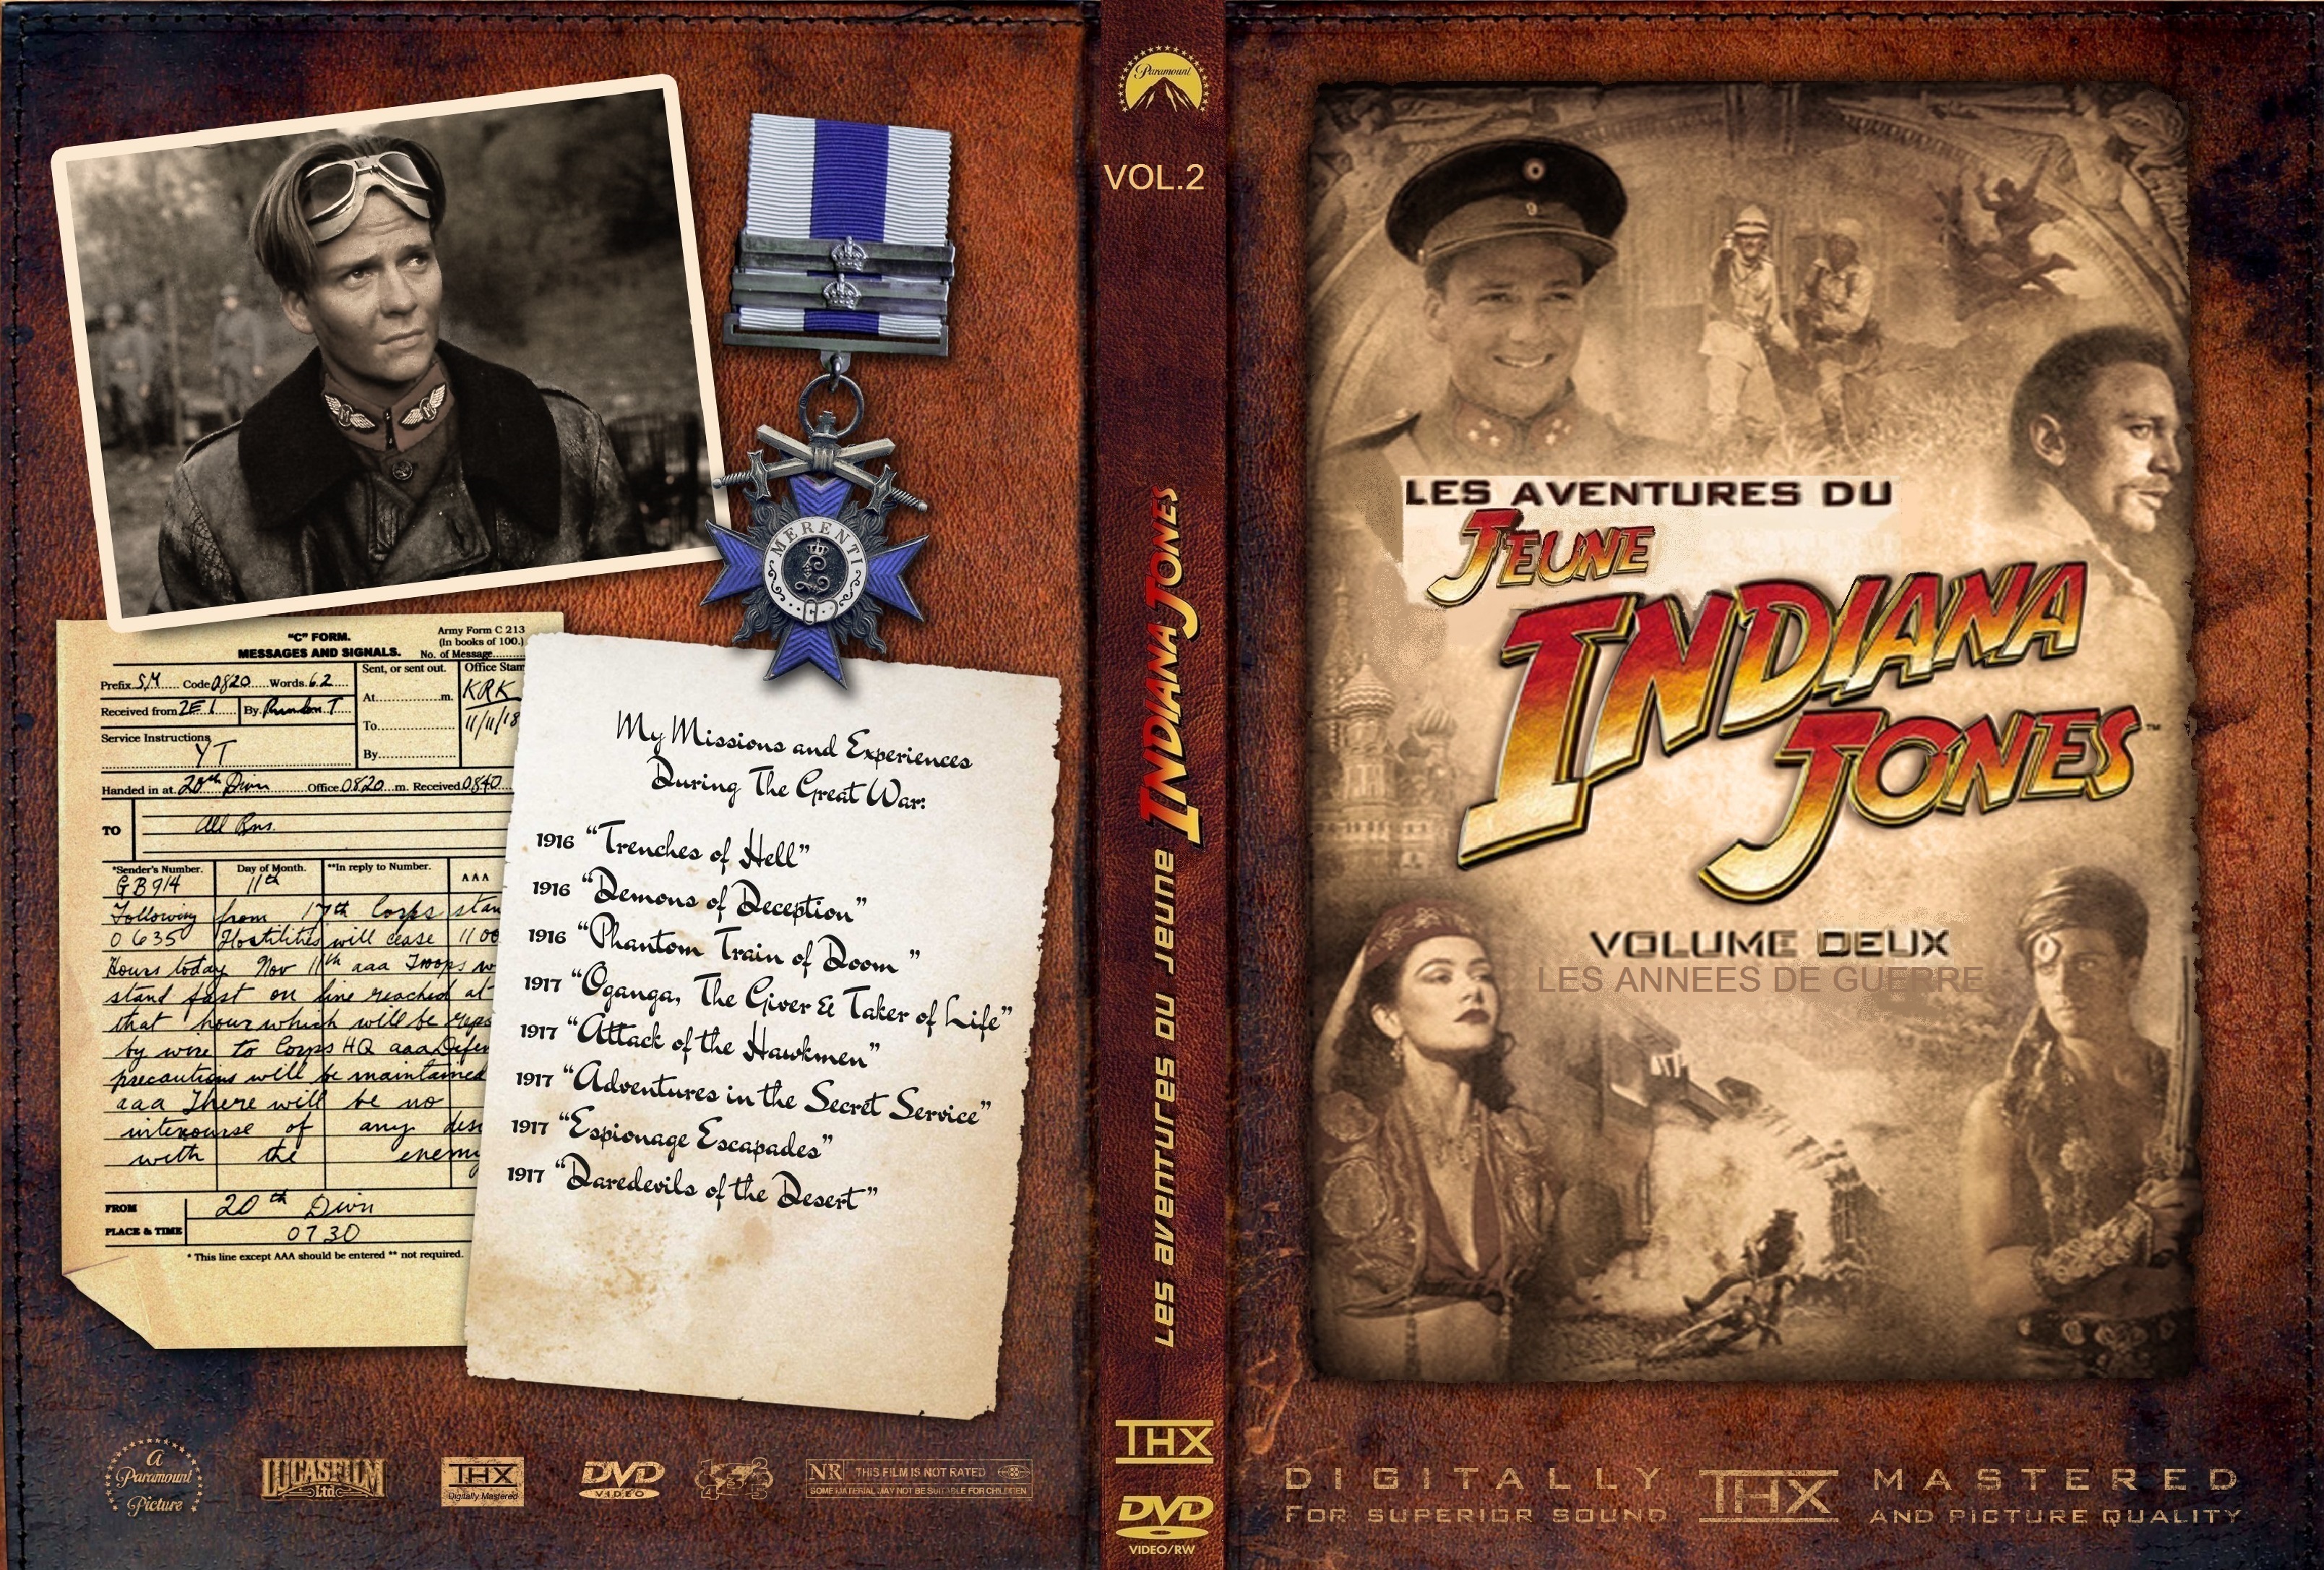 Jaquette DVD Les aventures du jeune Indiana Jones vol 2 custom